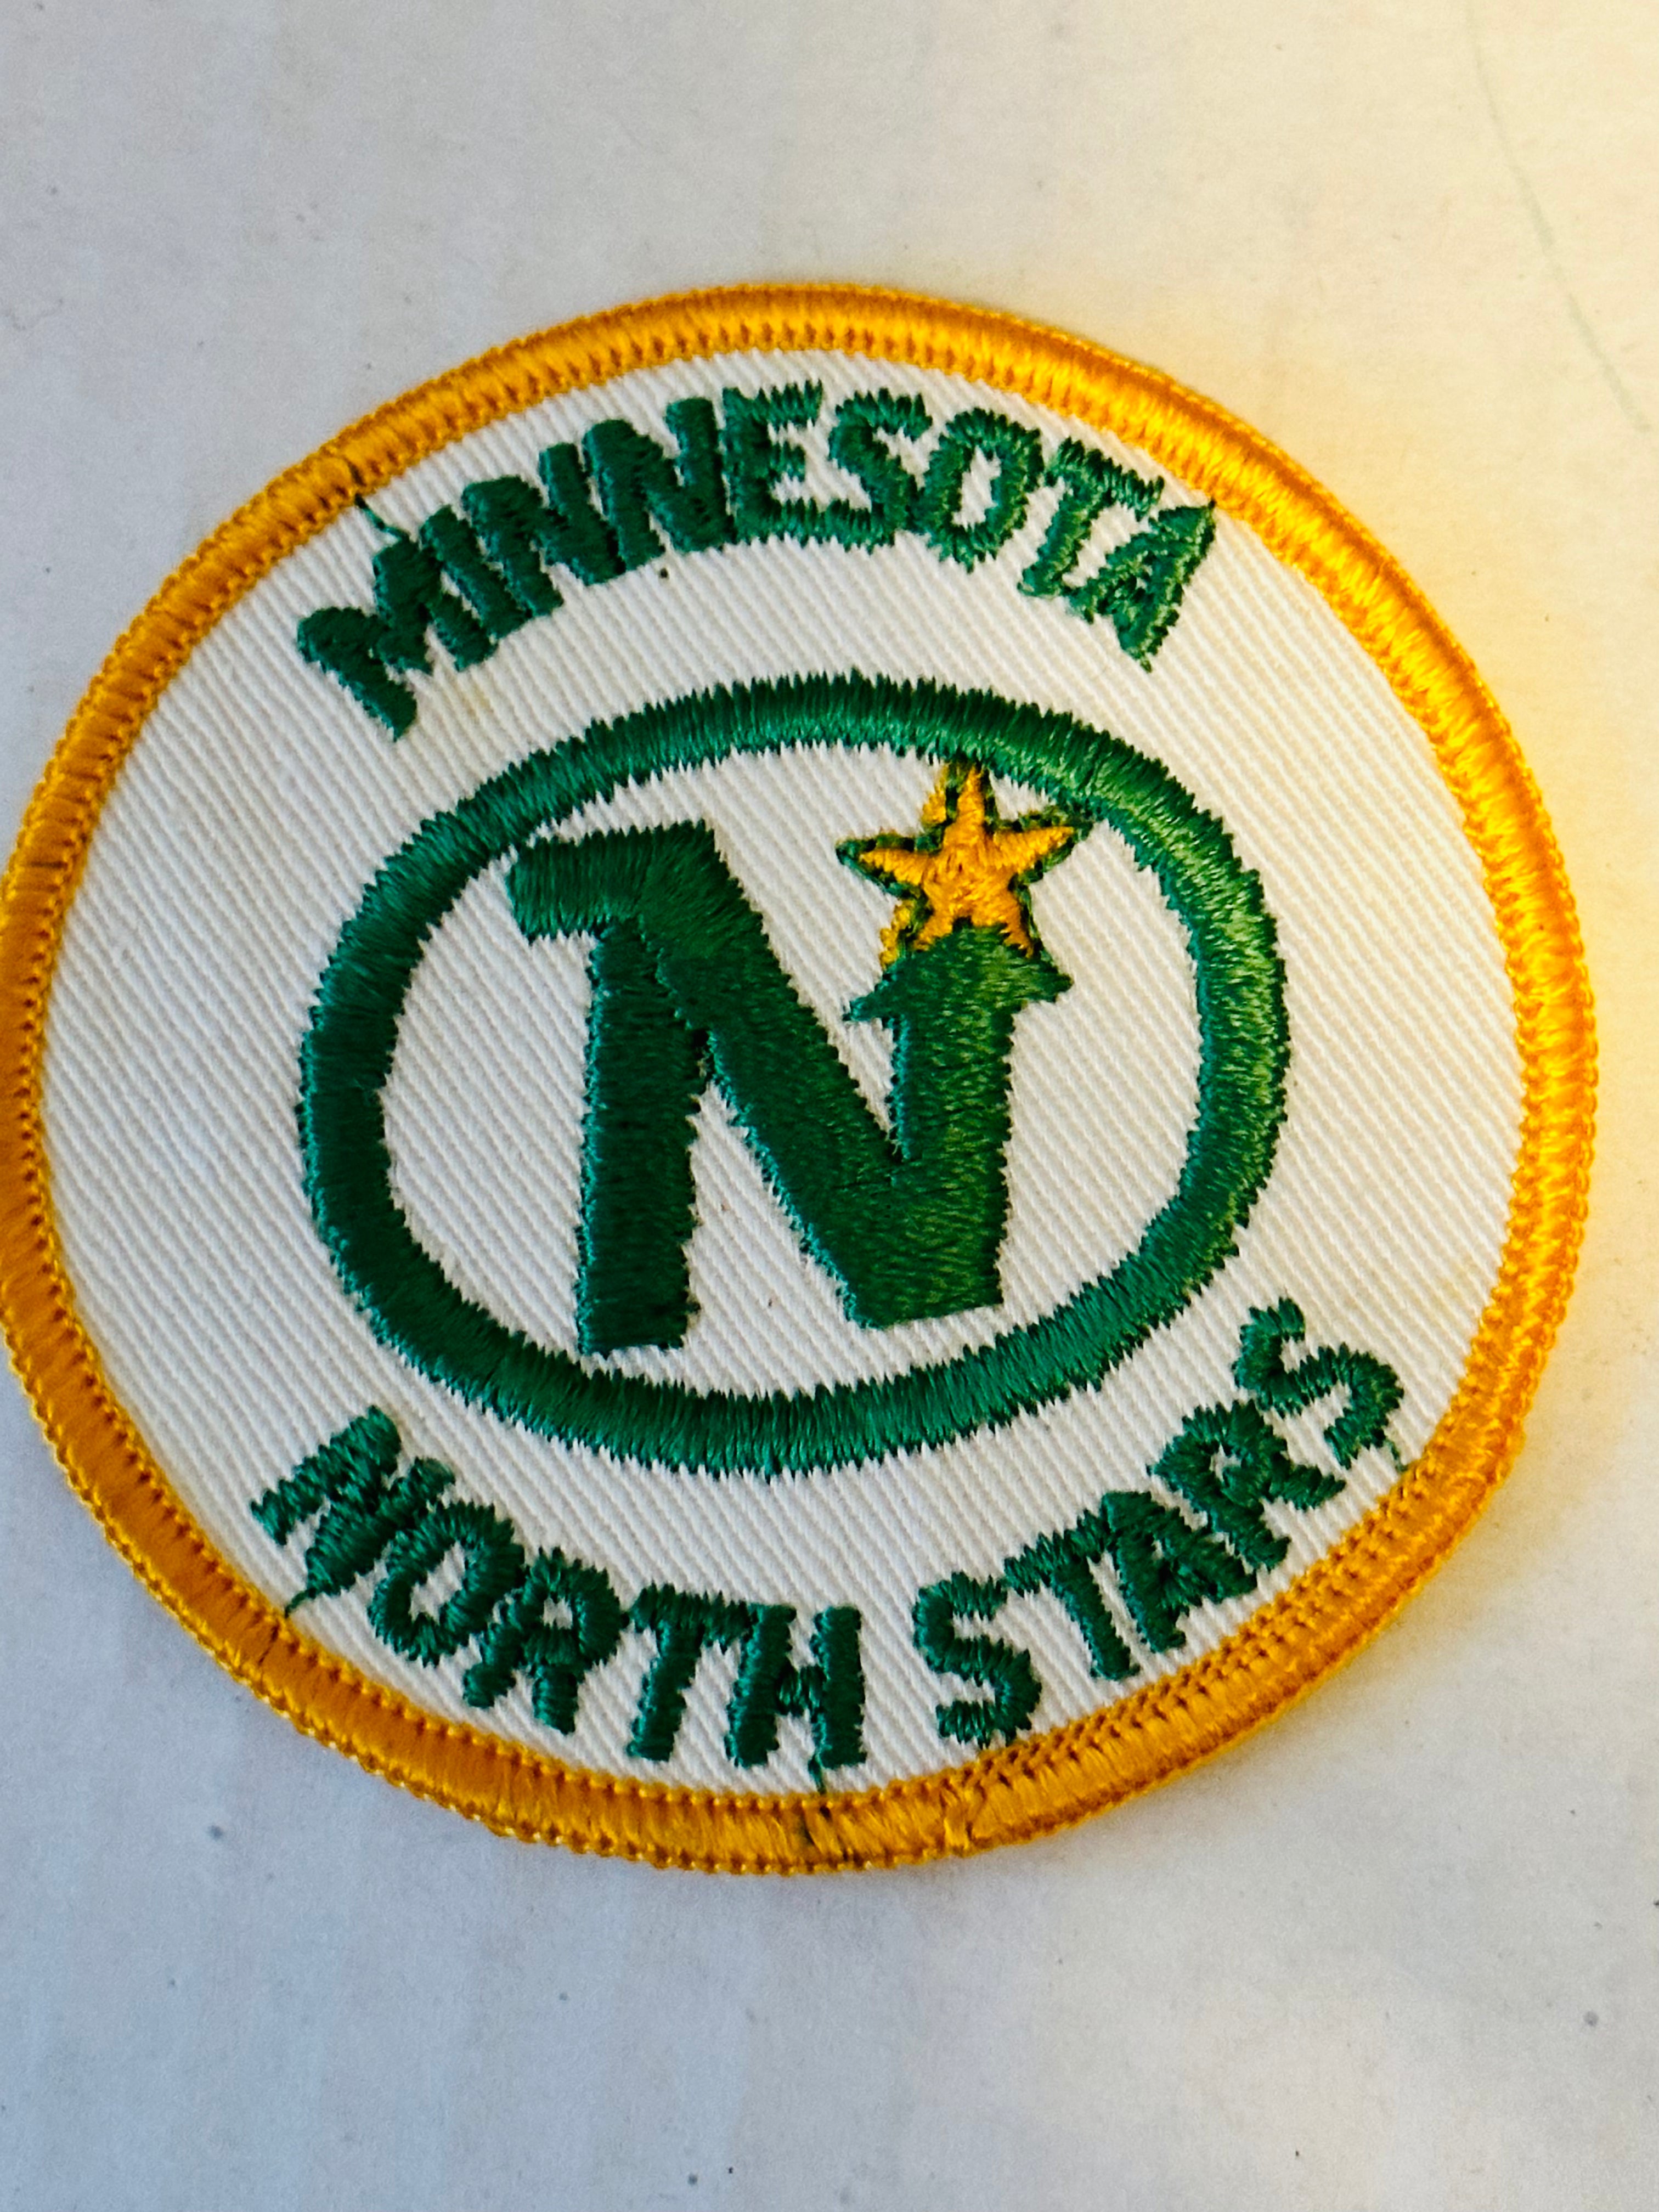 North stars vintage 3x3 hockey patch 1970s